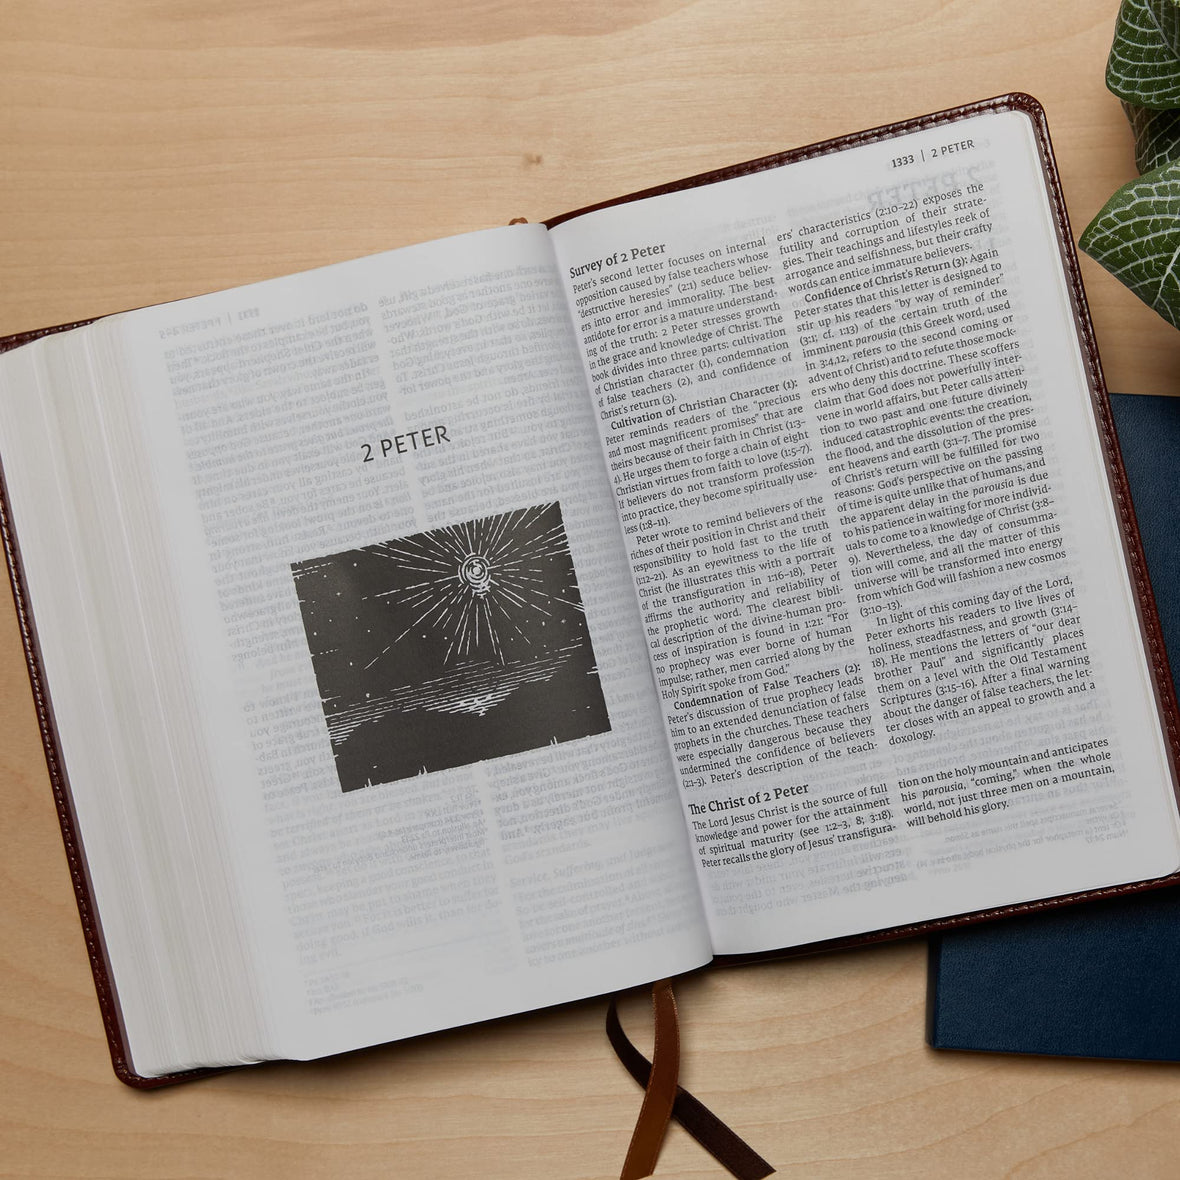 NET Bible, Thinline Art Edition, Large Print, Comfort Print: Holy Bible